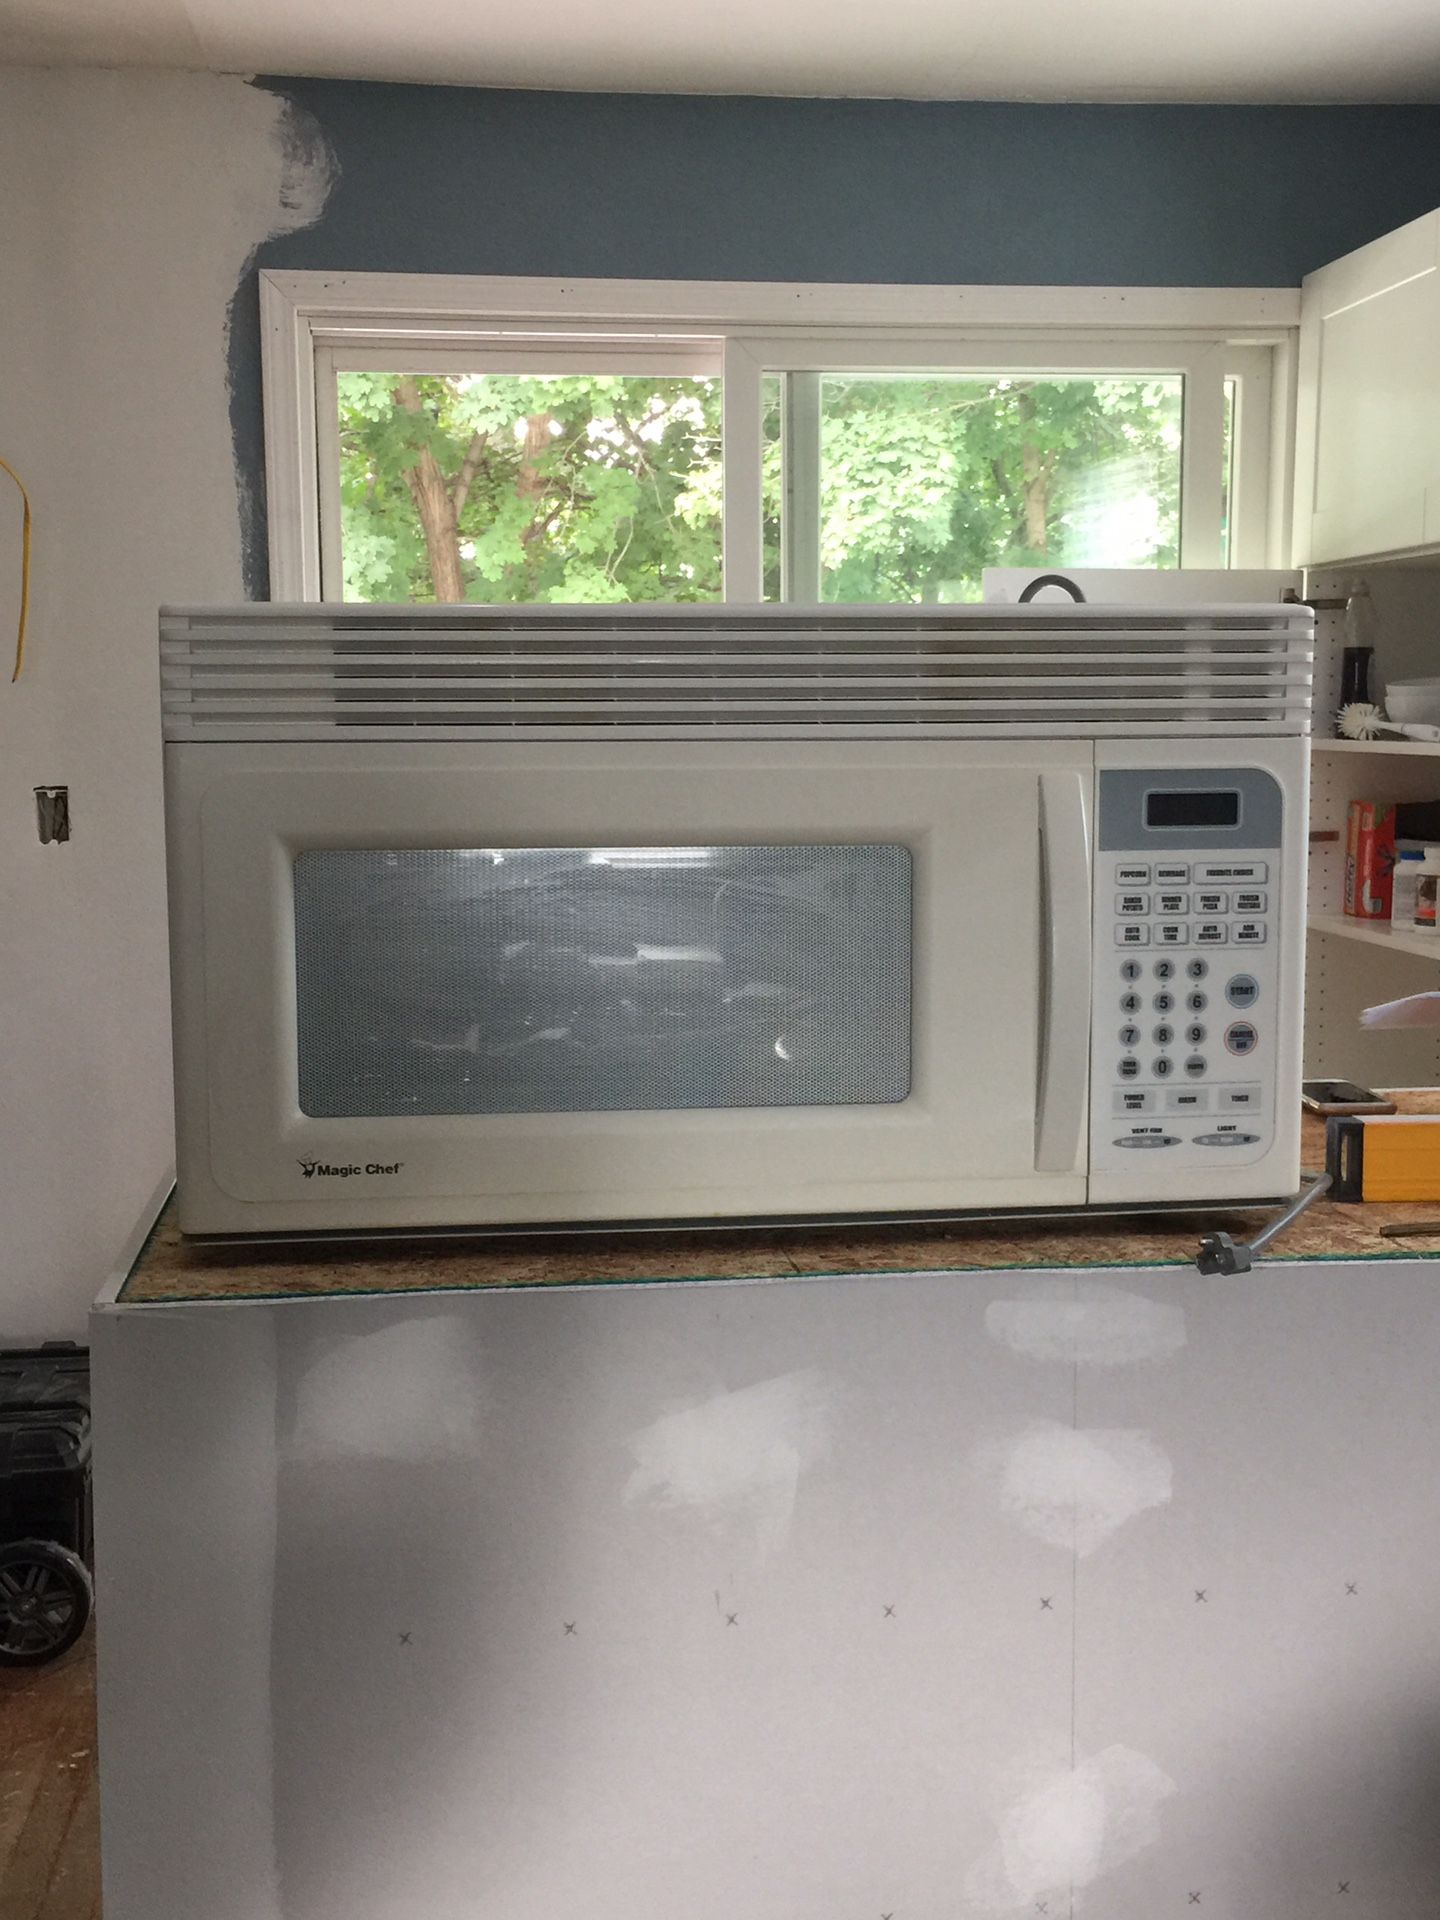 Microwave (OTR)